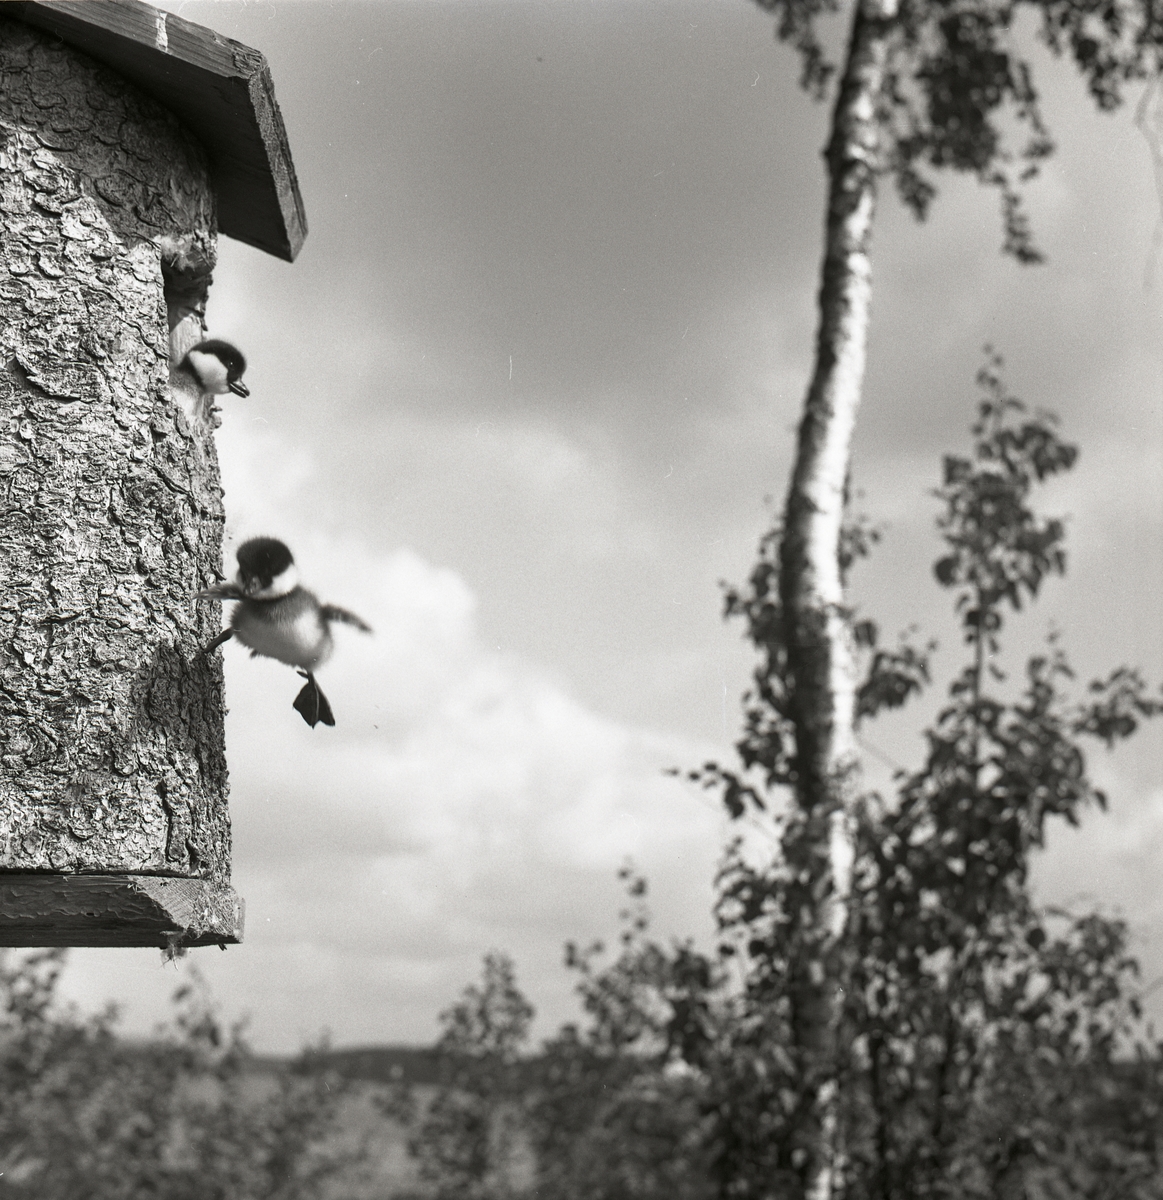 En knipunge hoppar från en fågelholk mot marken. Kvar i holkens öppning sitter ytterligare en fågelunge, 3 juli 1966.